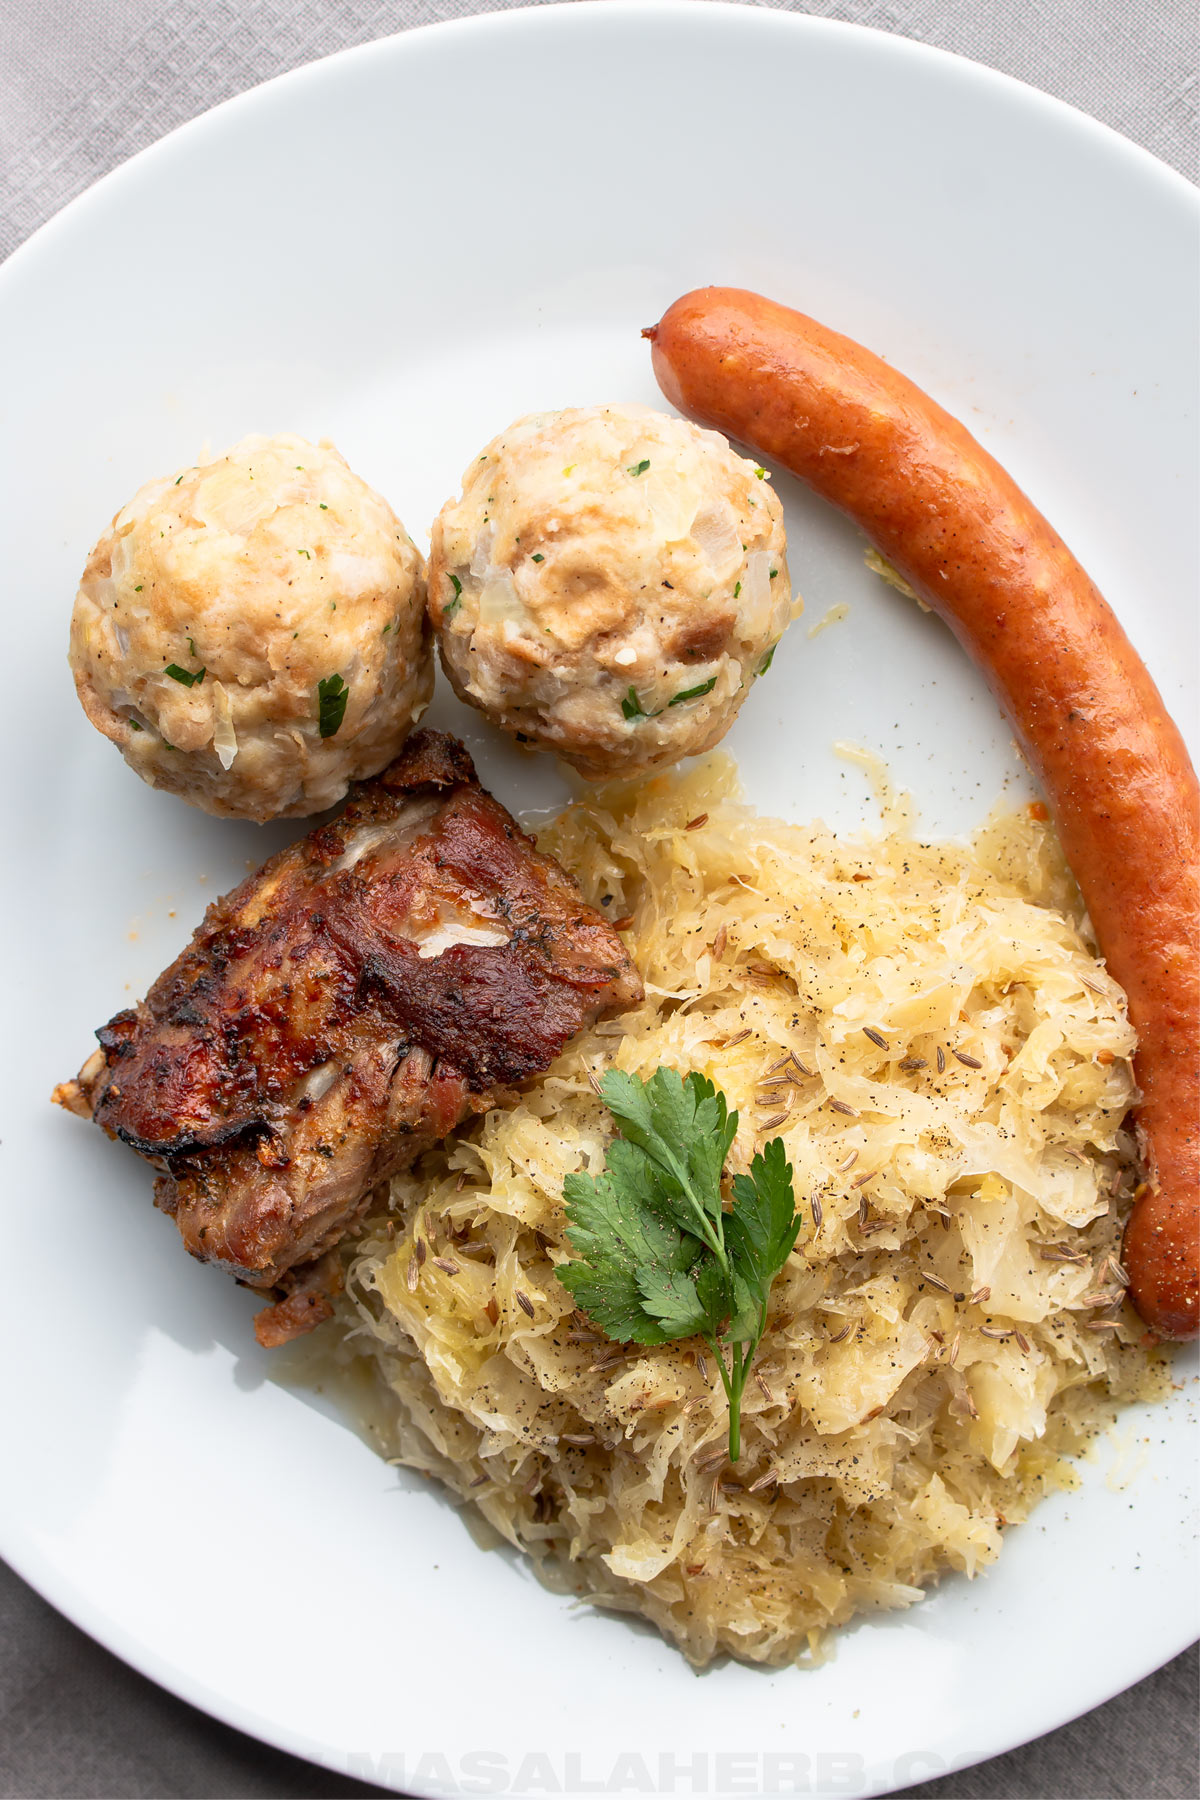 Semmelknödel plate with Sauerkraut and meat